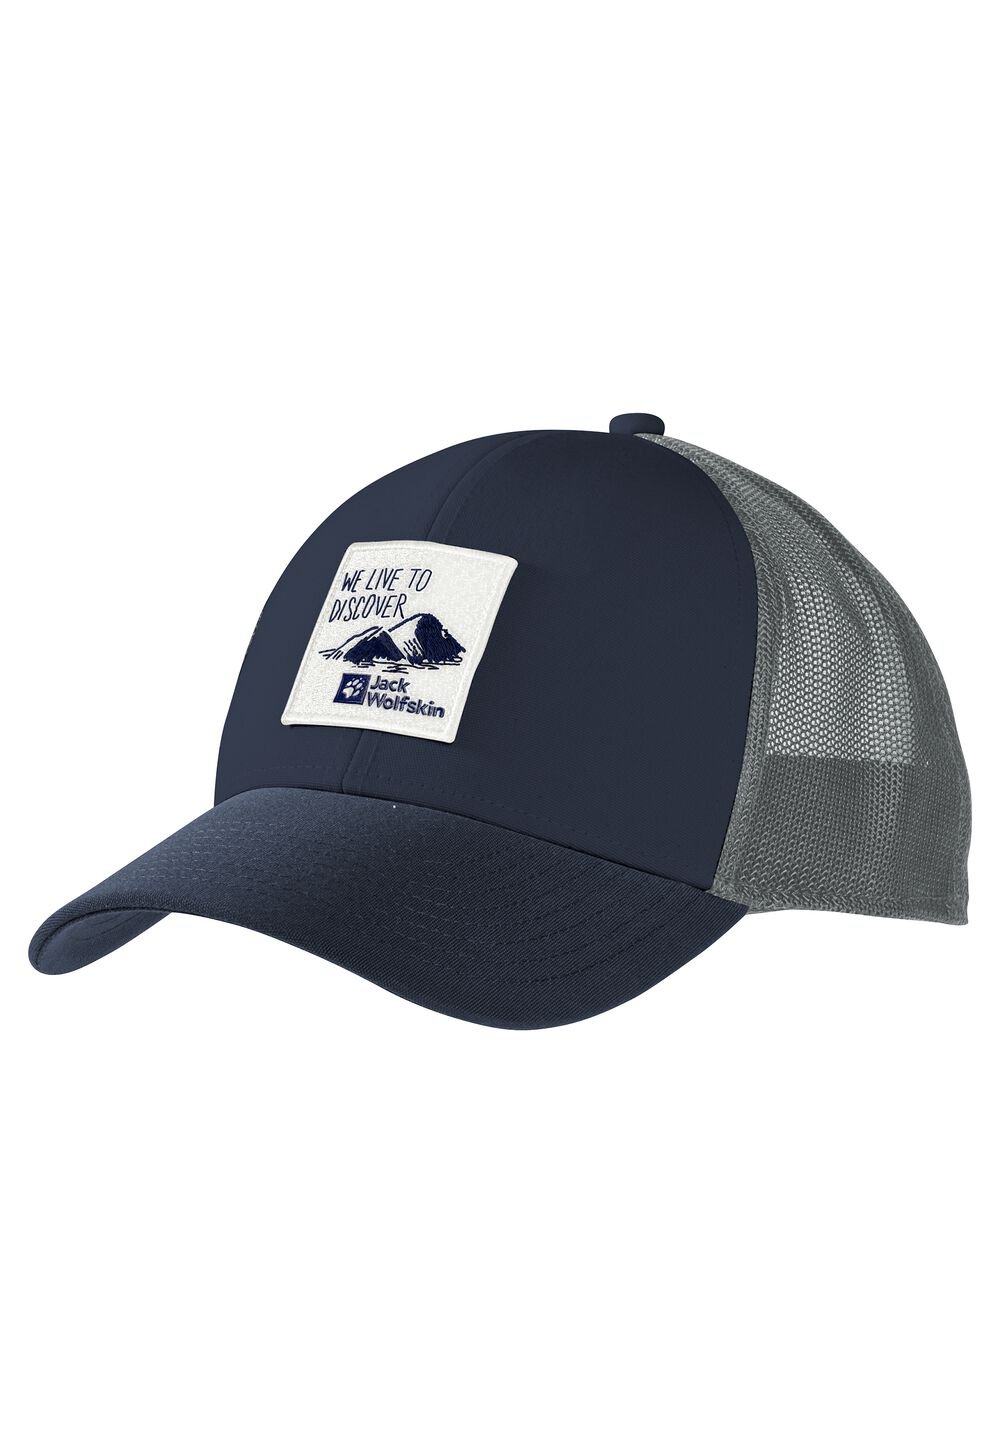 Jack Wolfskin Brand Cap Basecap one size blue night blue